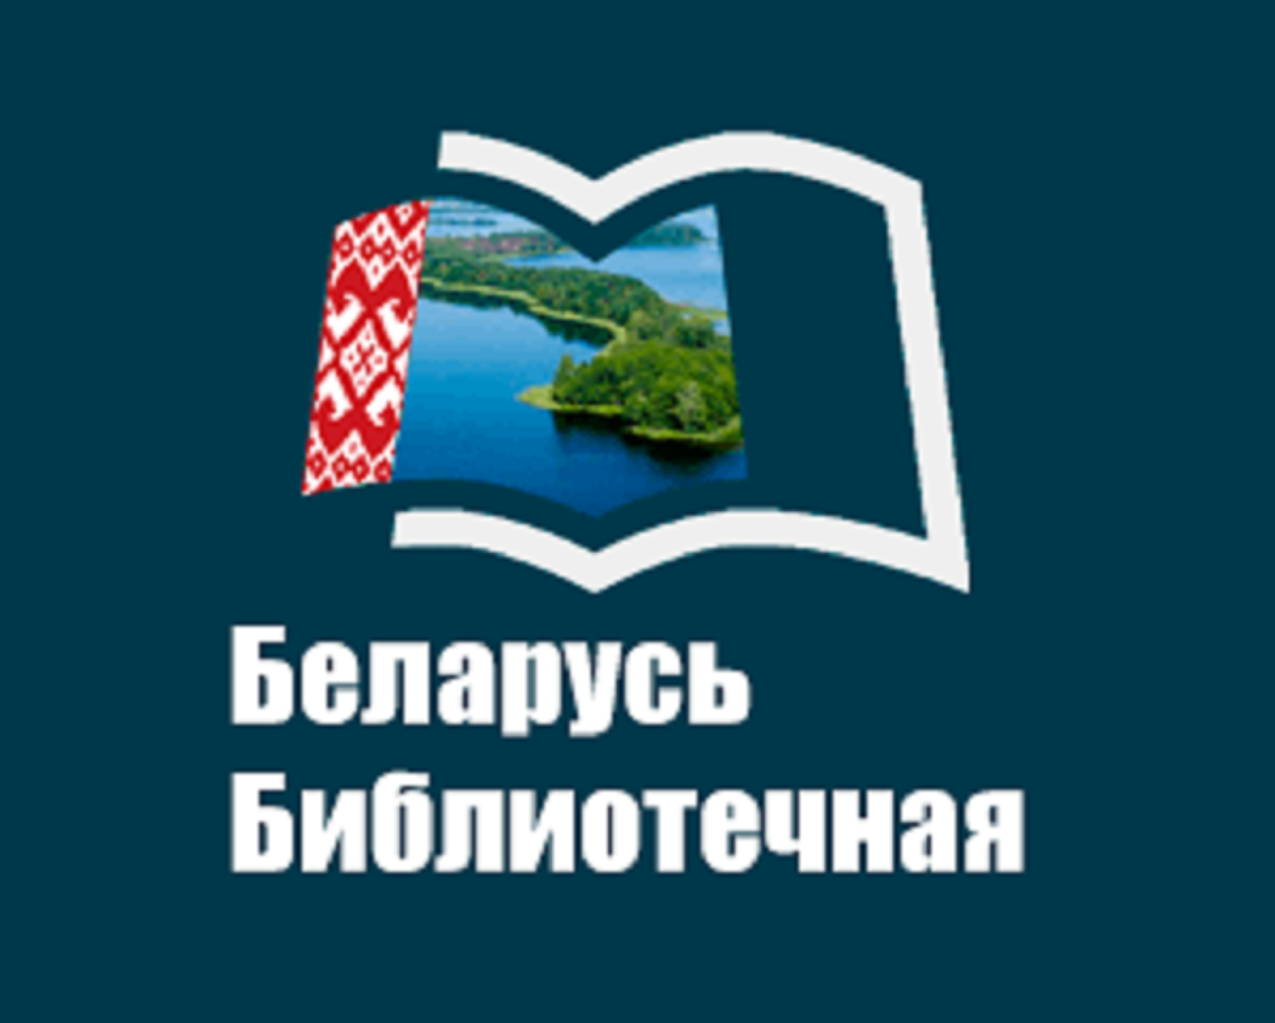 http://belaruslibrary.nlb.by/